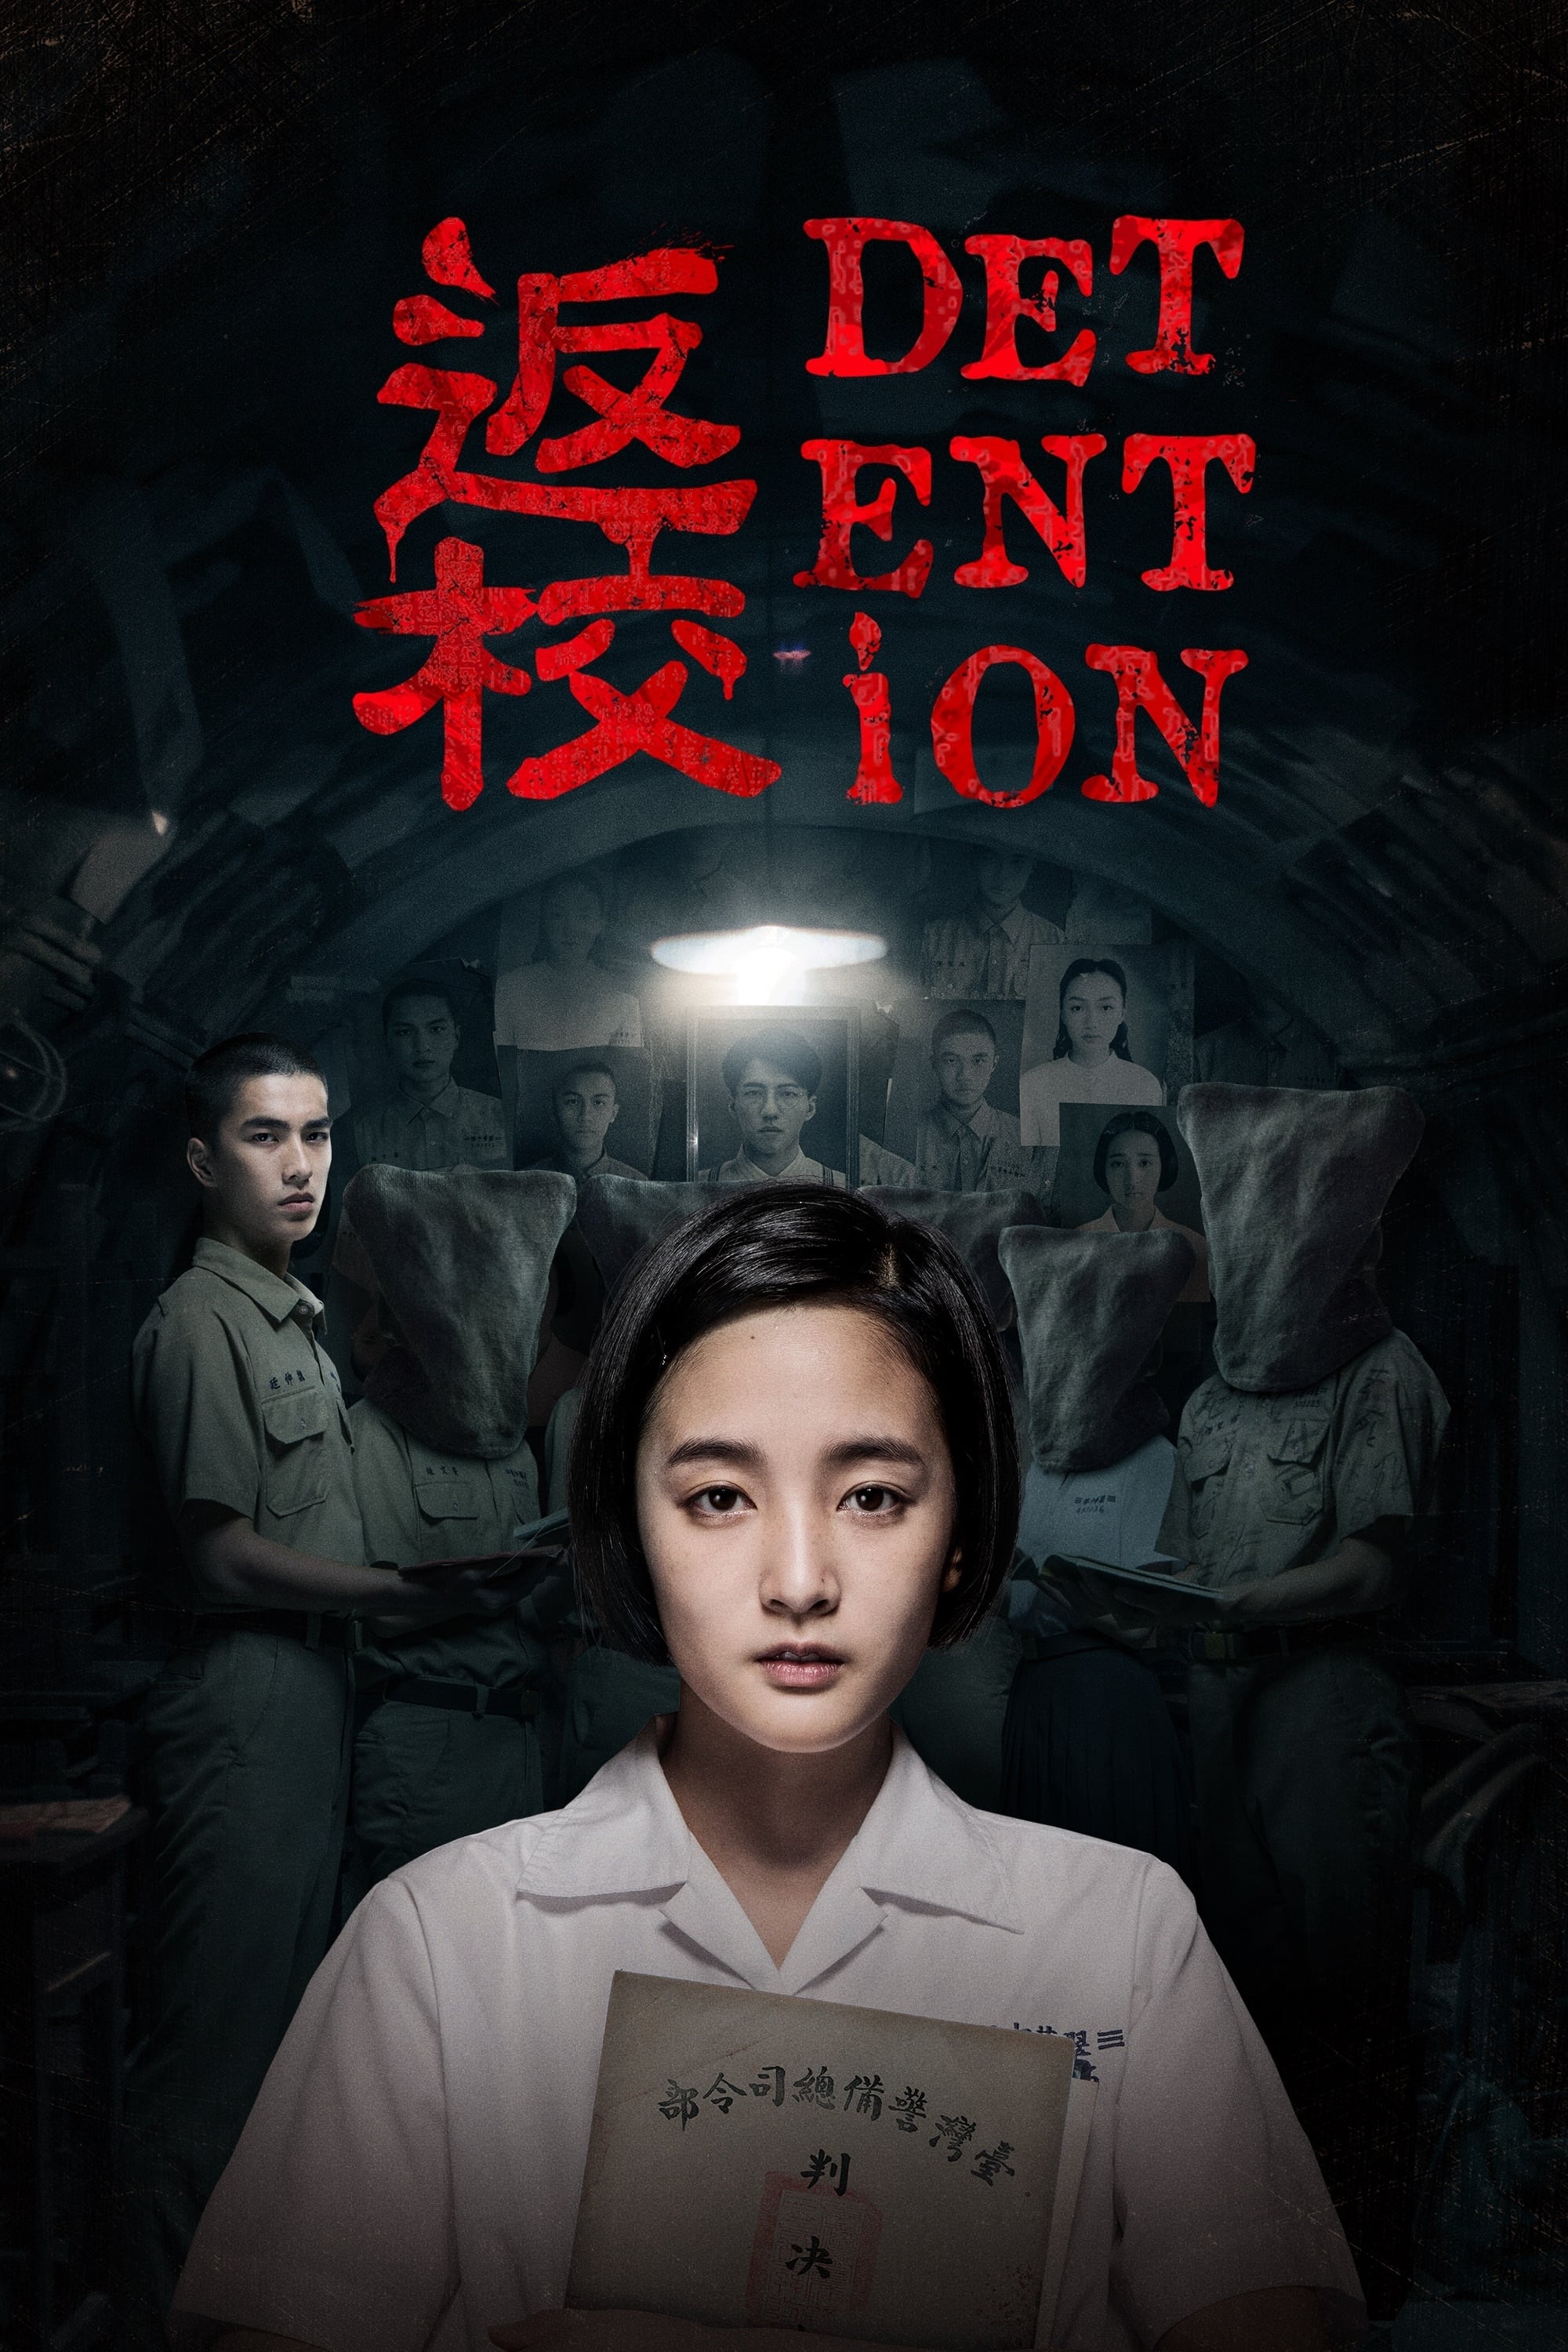 Detention (2019)